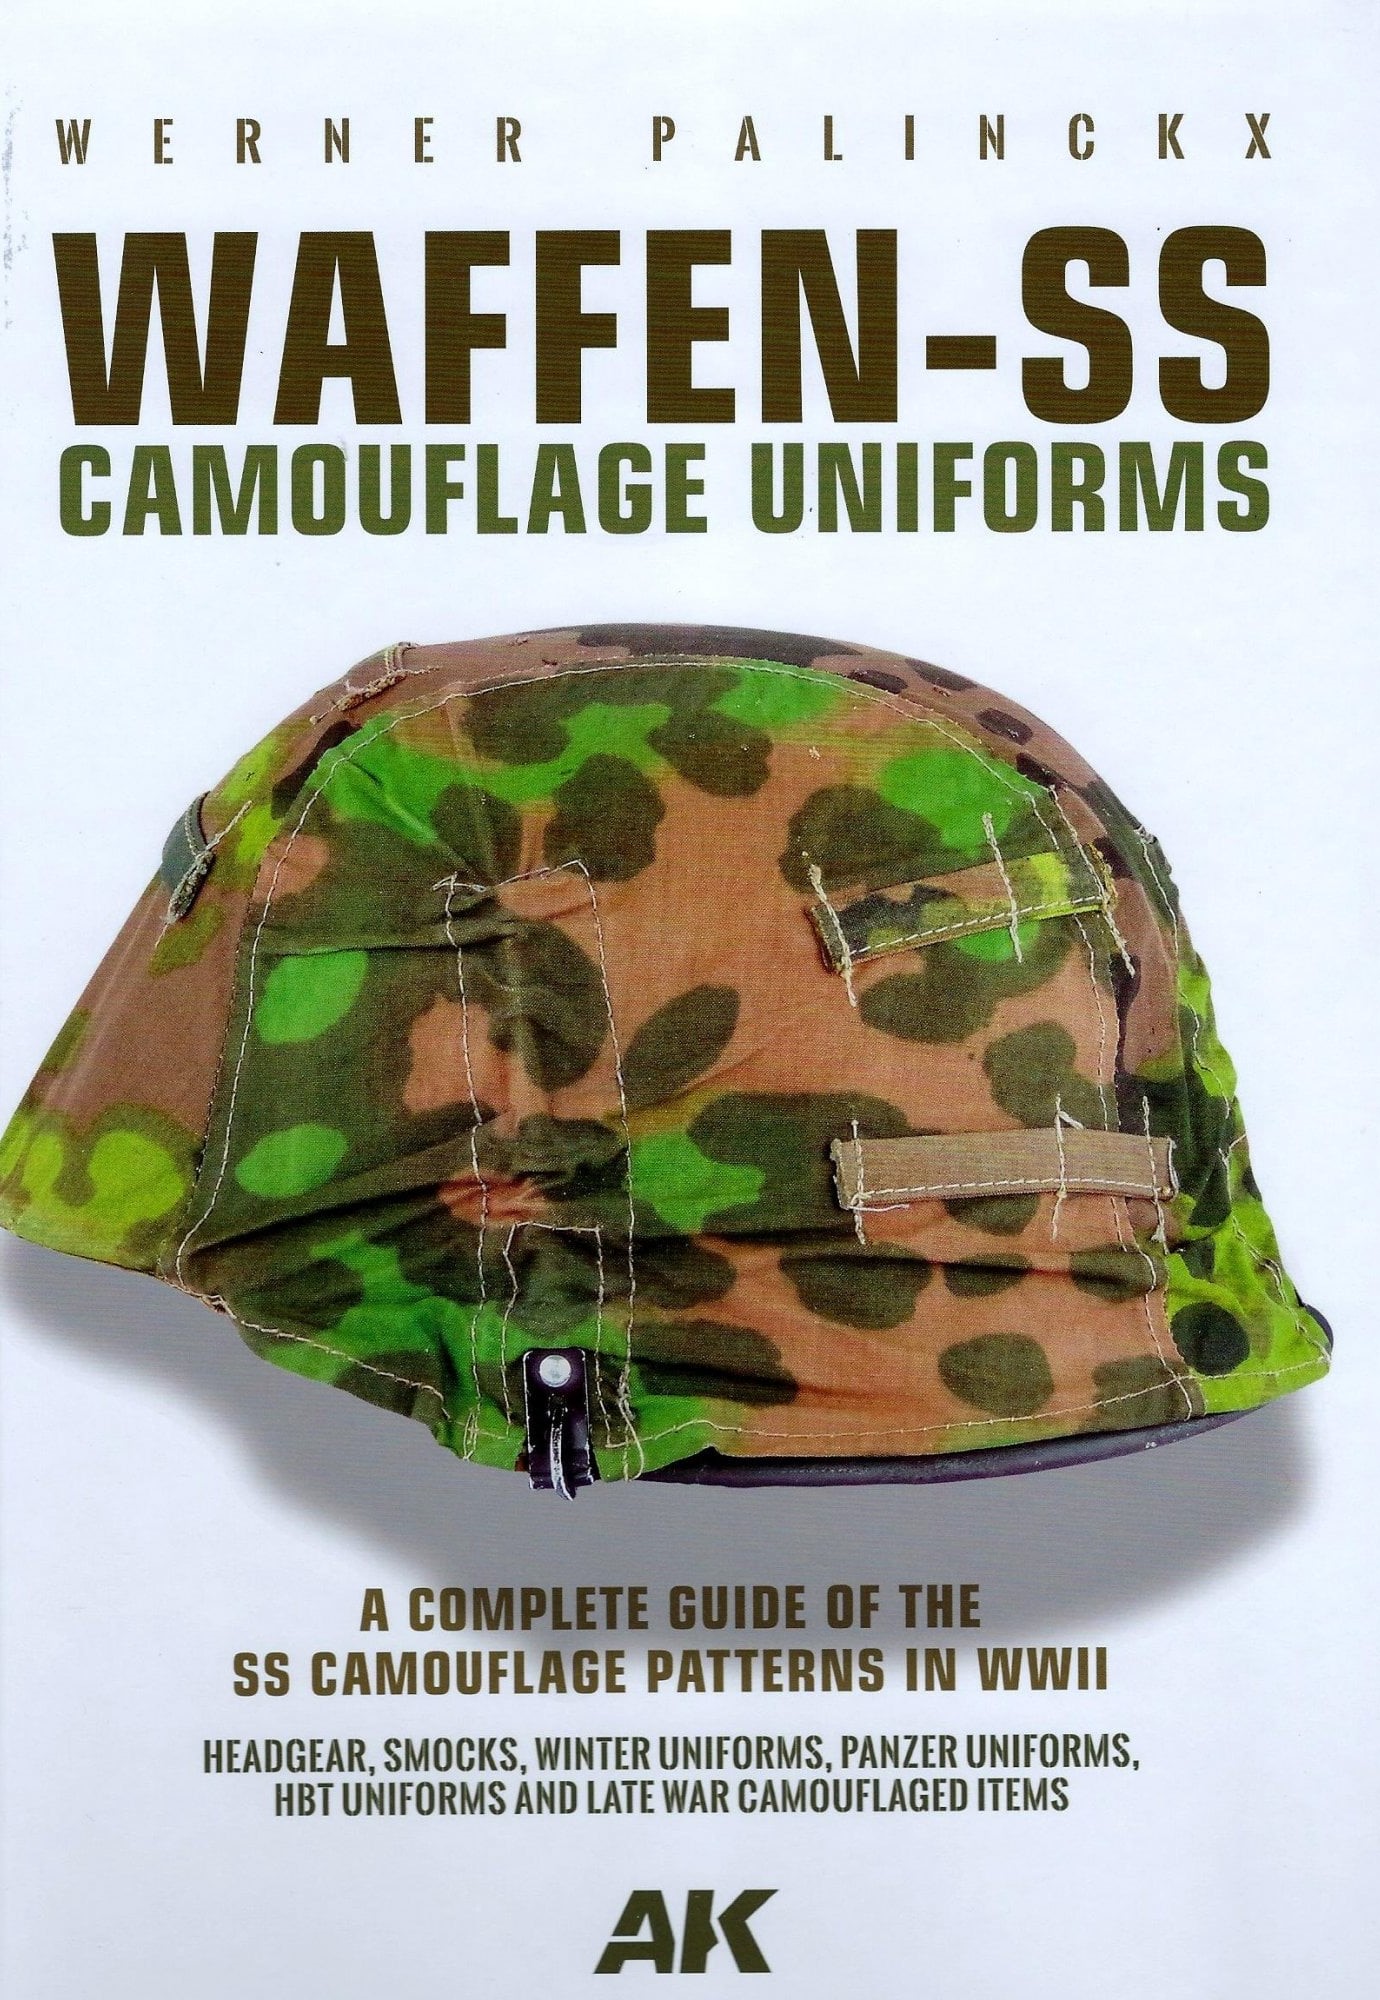 Waffen-SS camouflage uniforms